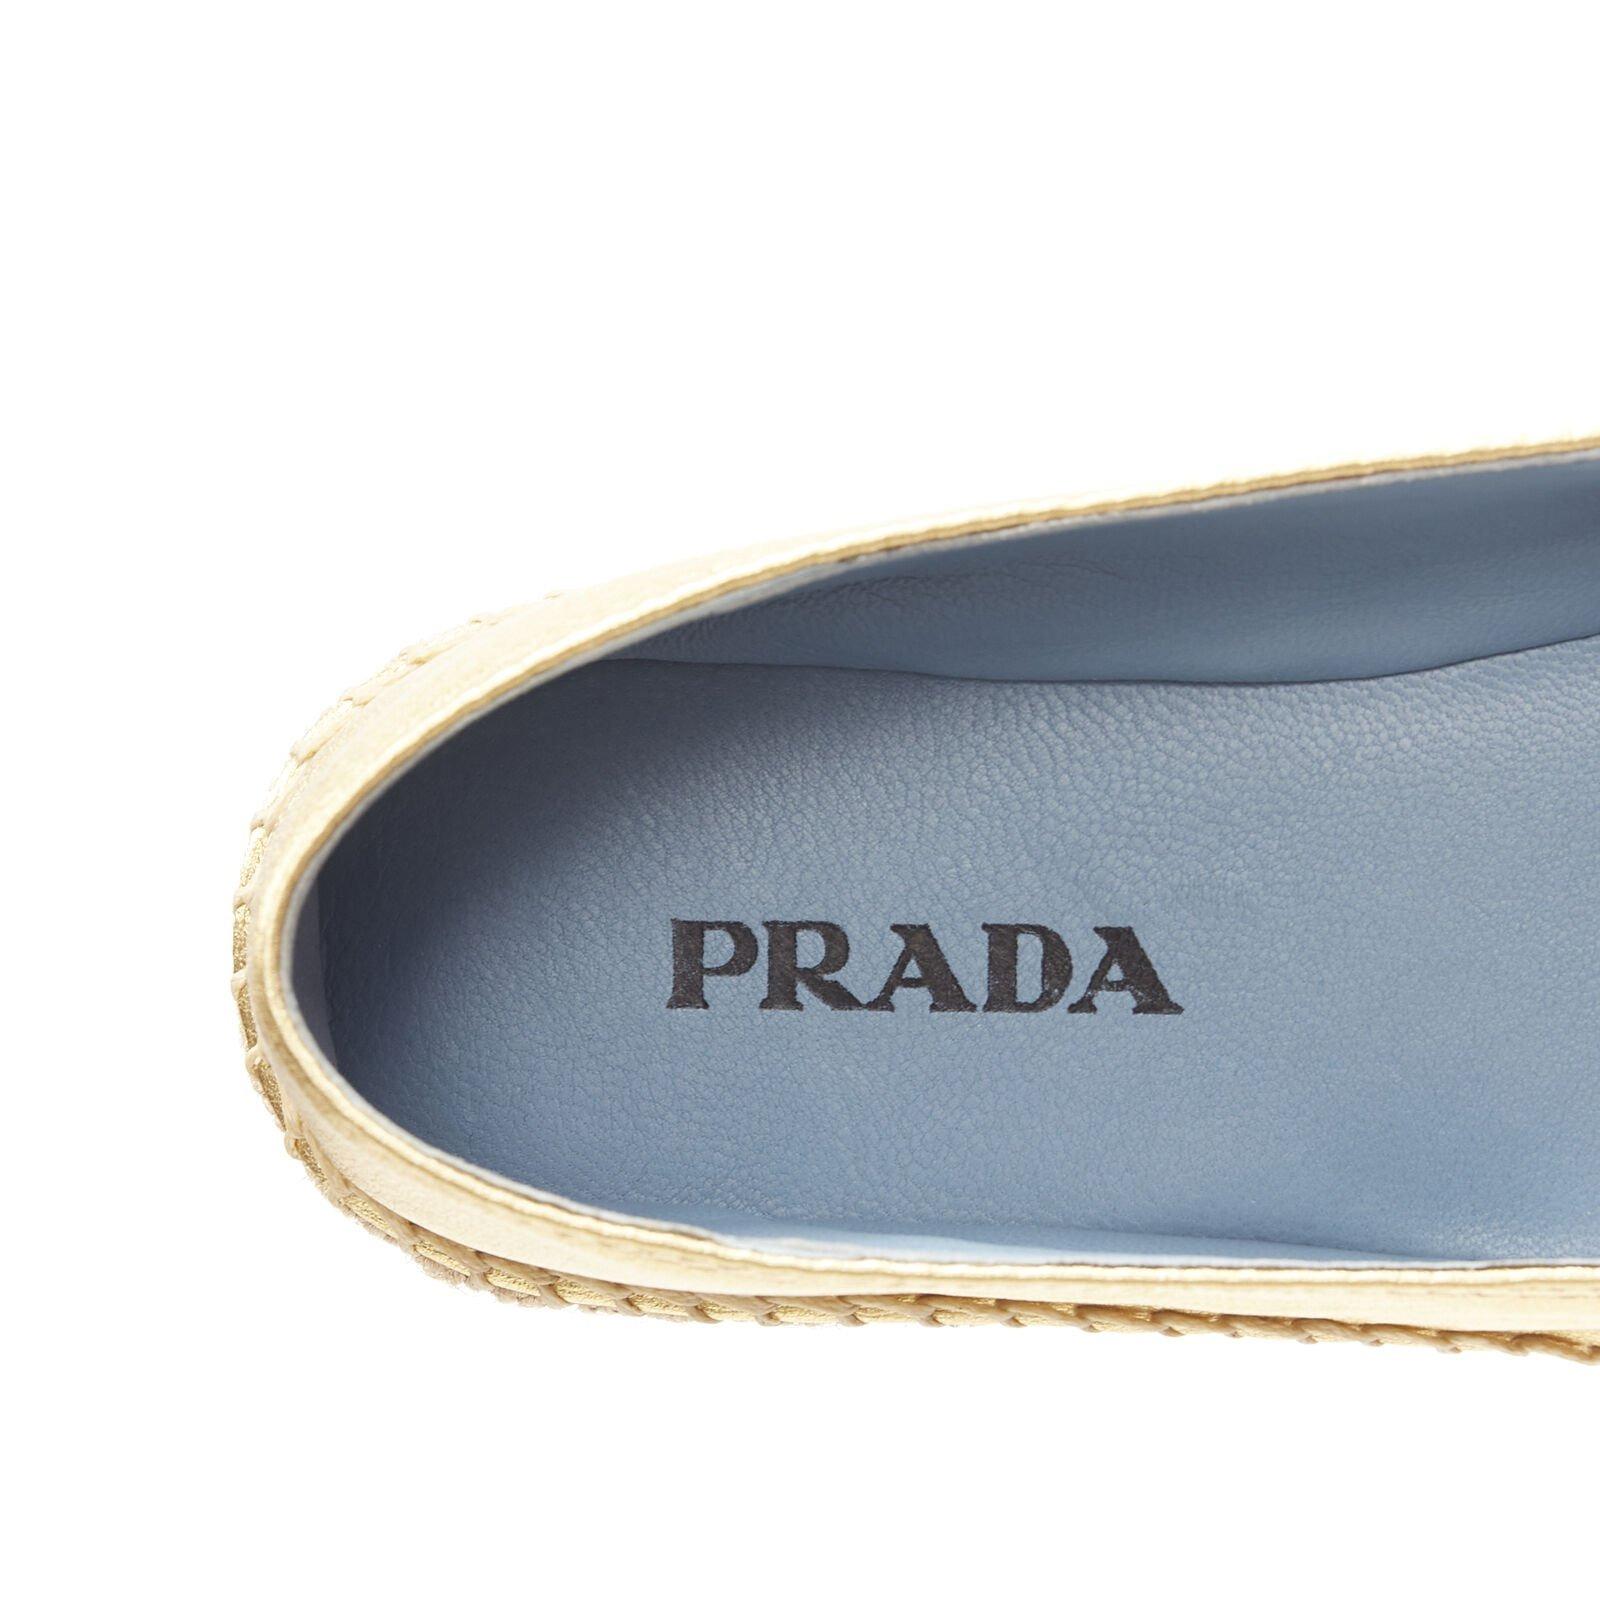 new PRADA metallic gold leather logo peep toe jute platform espadrille shoe EU37 5